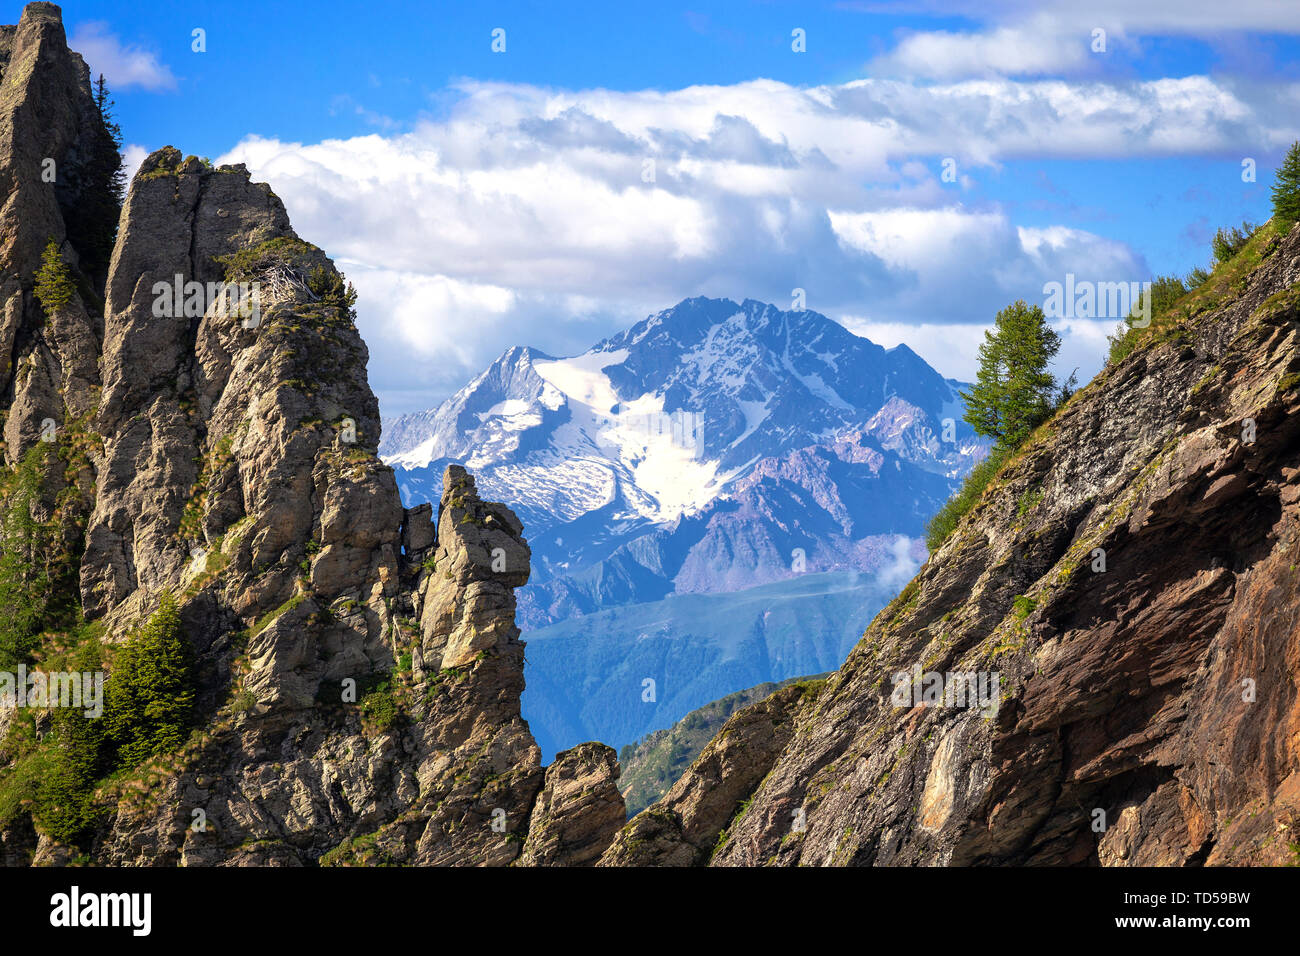 Mount Disgrazia between two rocky peaks, Valgerola, Orobie Alps, Valtellina, Lombardy, Italy, Europe Stock Photo